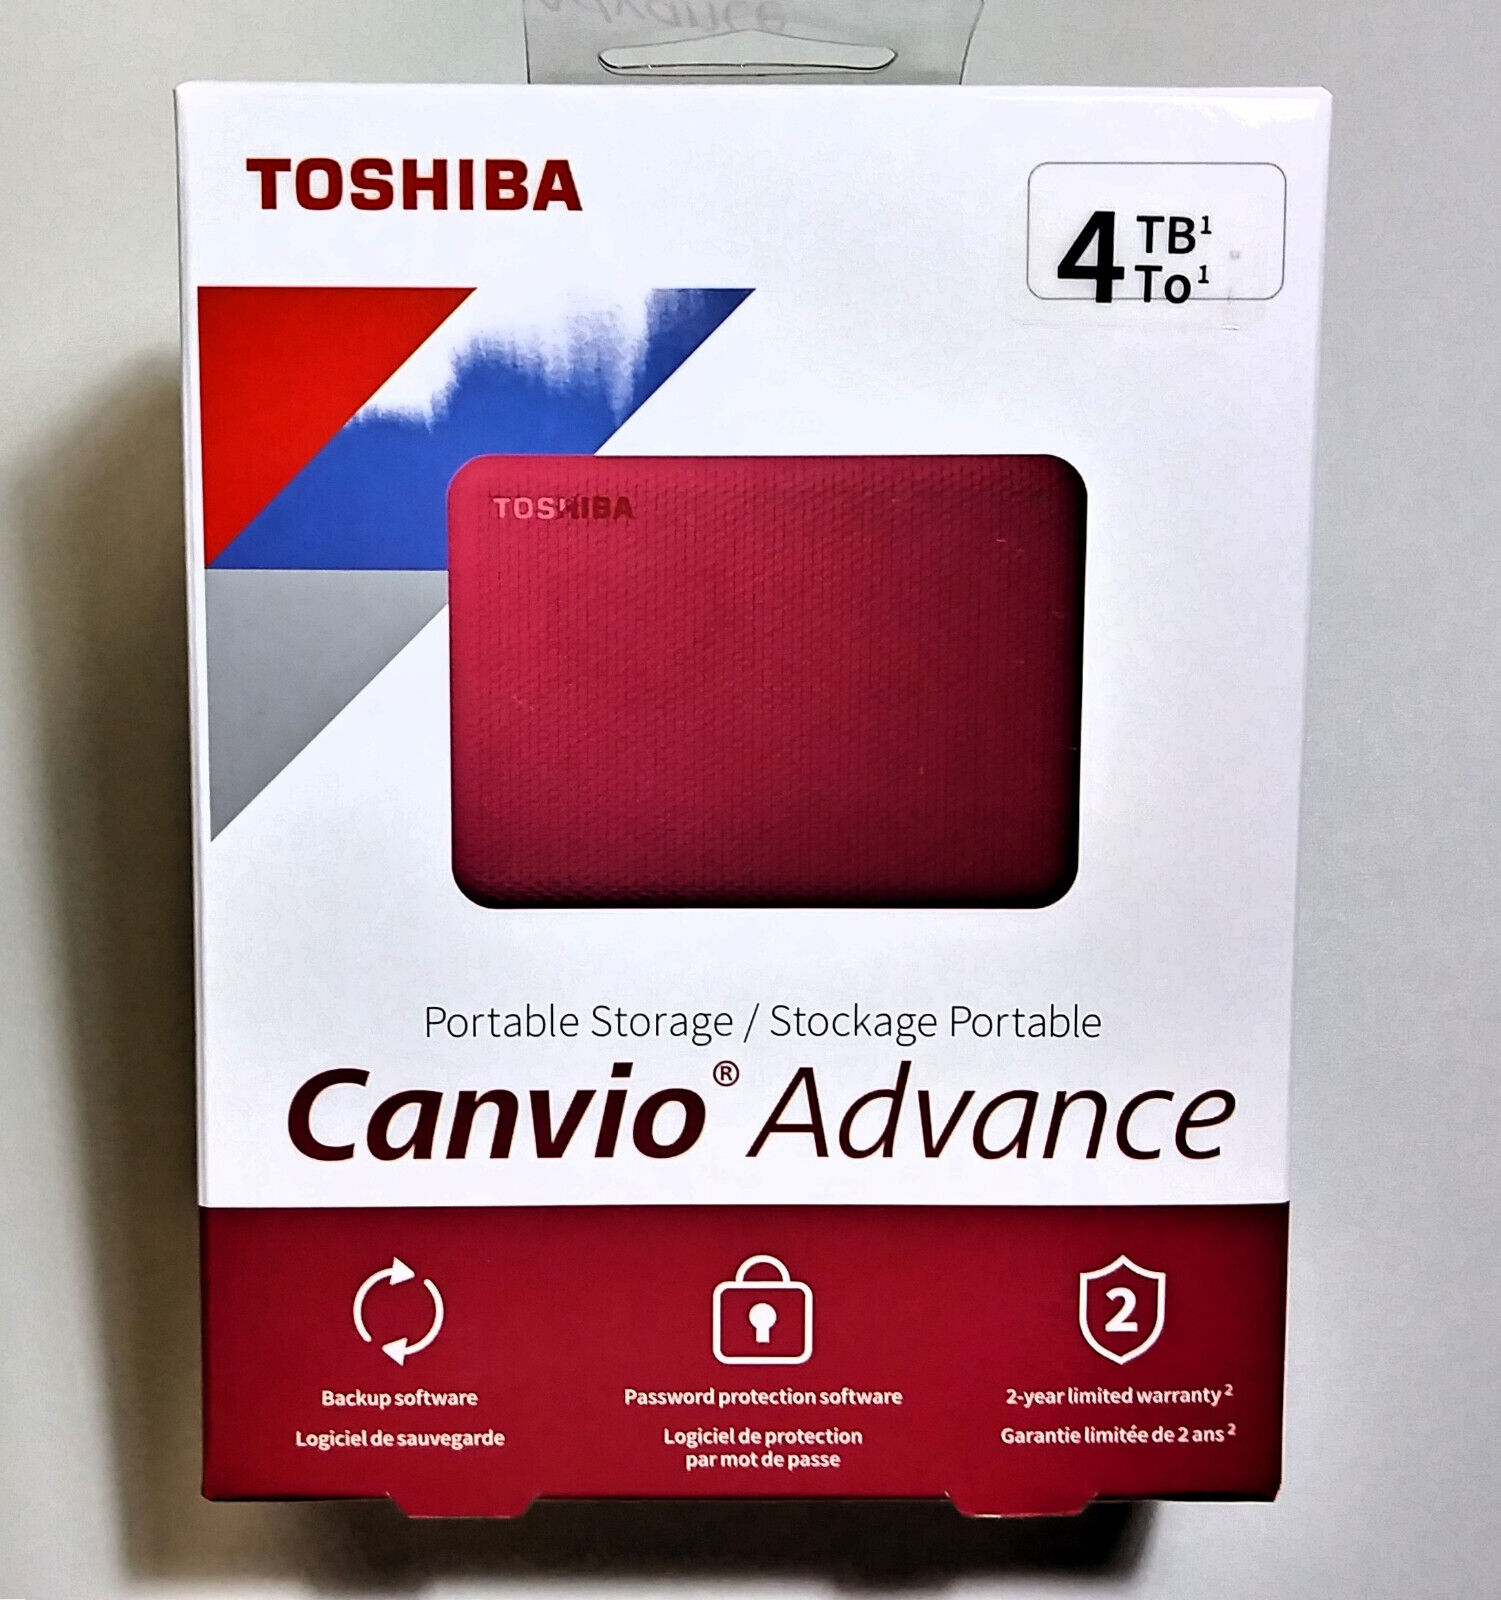 NEW 4TB Toshiba Canvio Advance Portable USB Hard Drive - Red *Free 1st Class